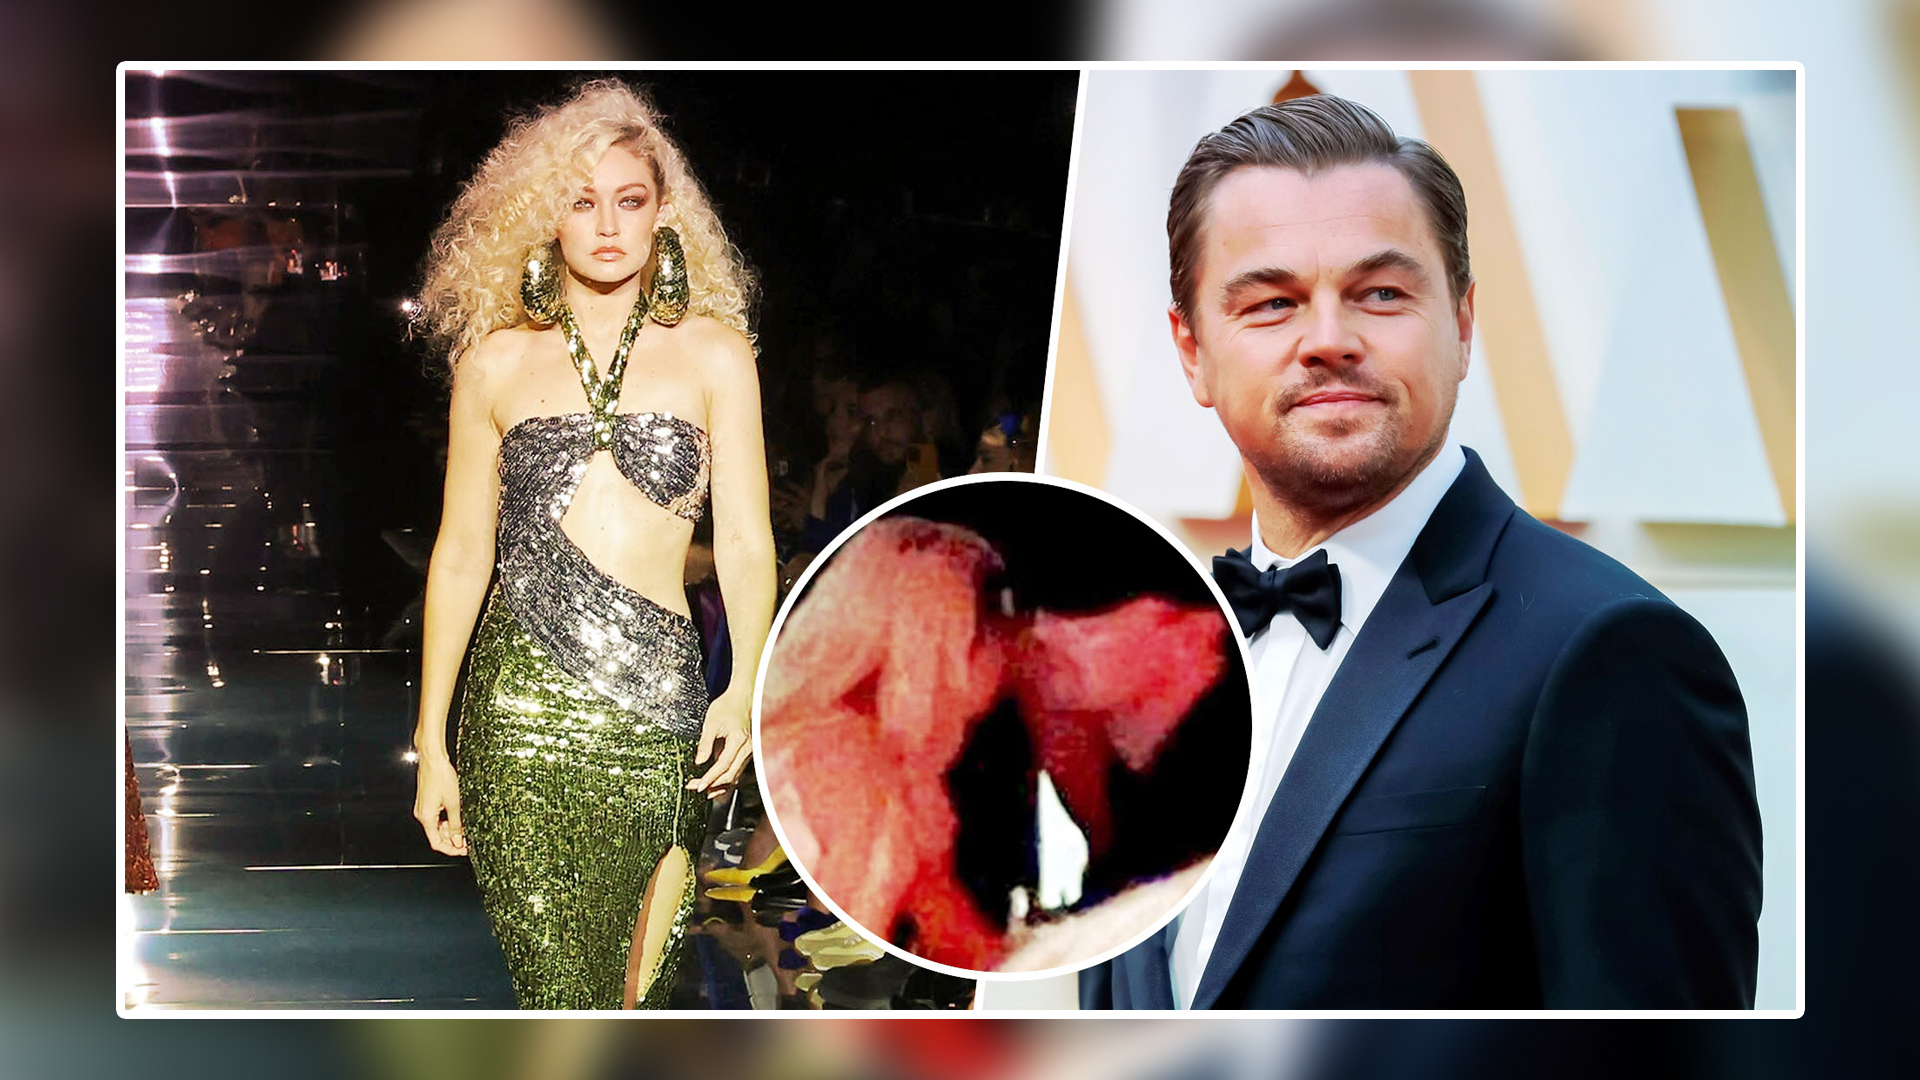 Possible Romance Between Gigi Hadid and Leonardo DiCaprio